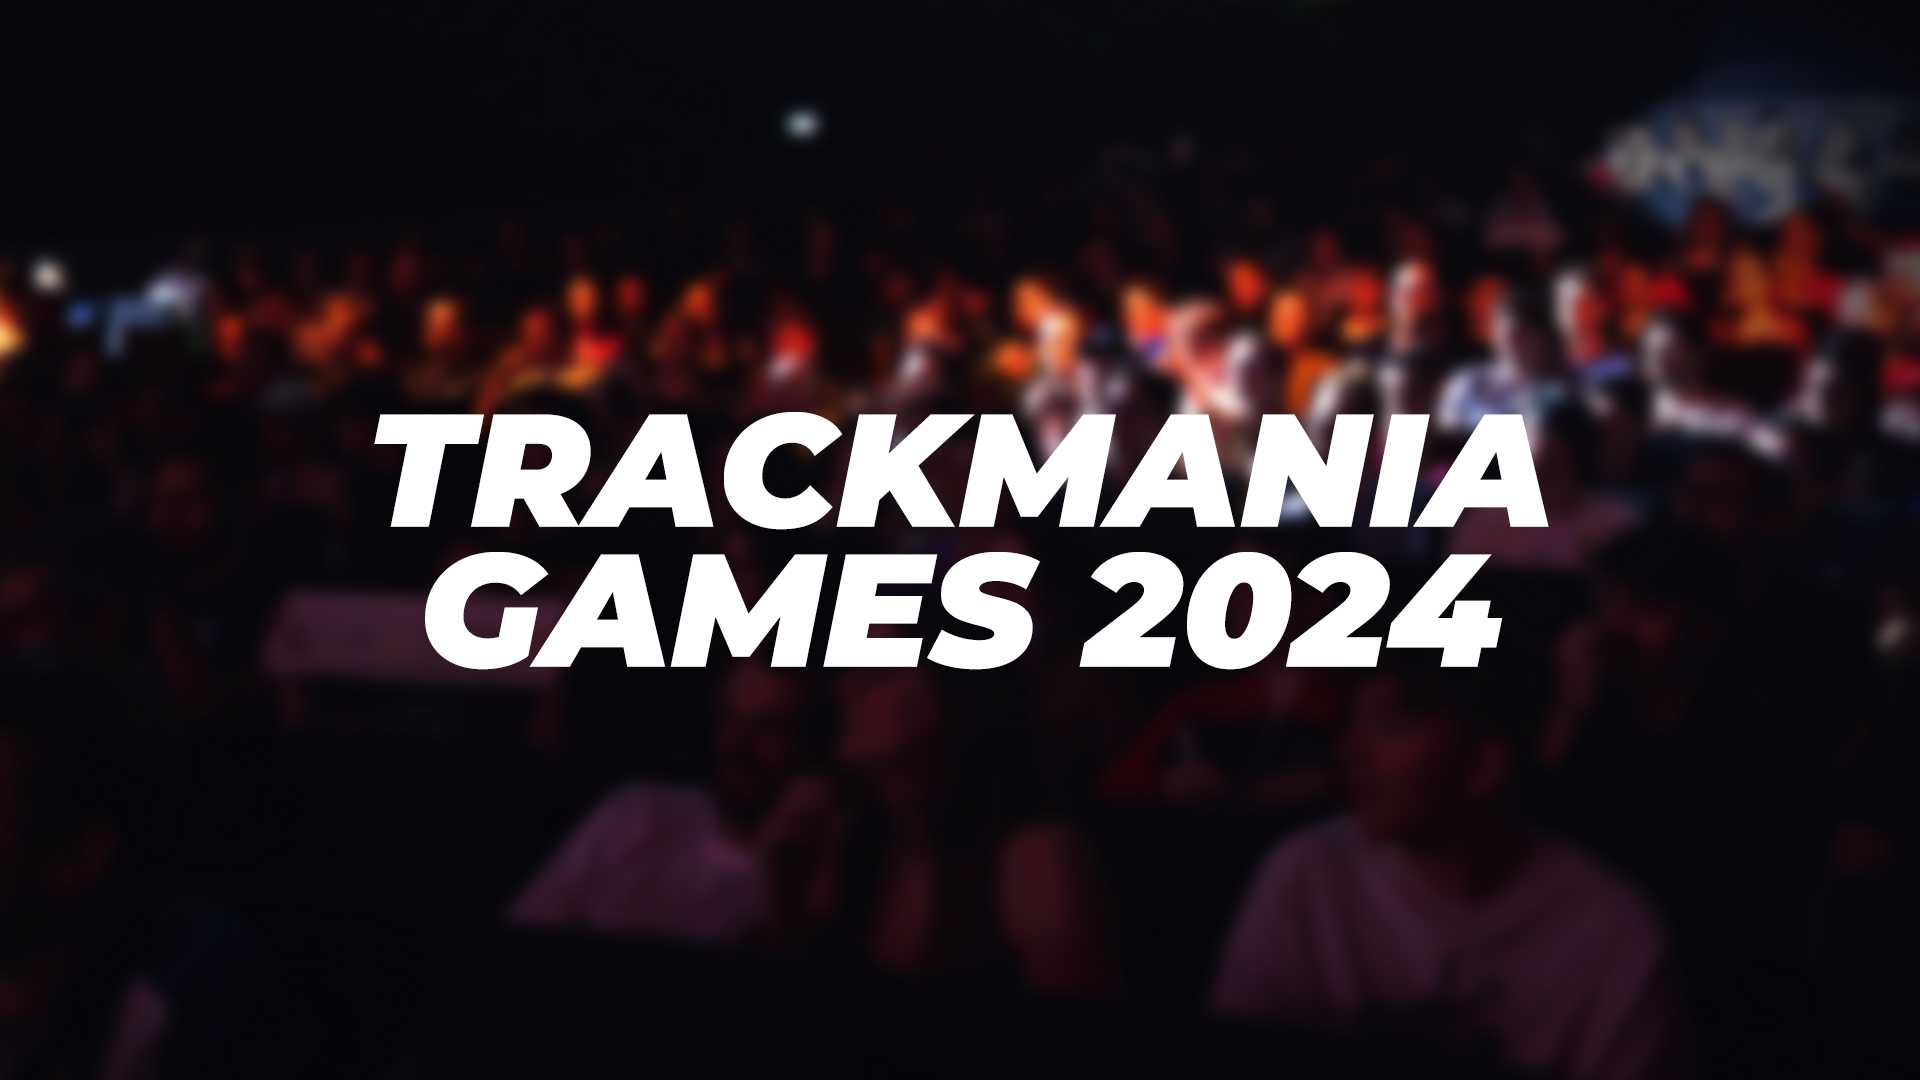 Trackmania Games 2024